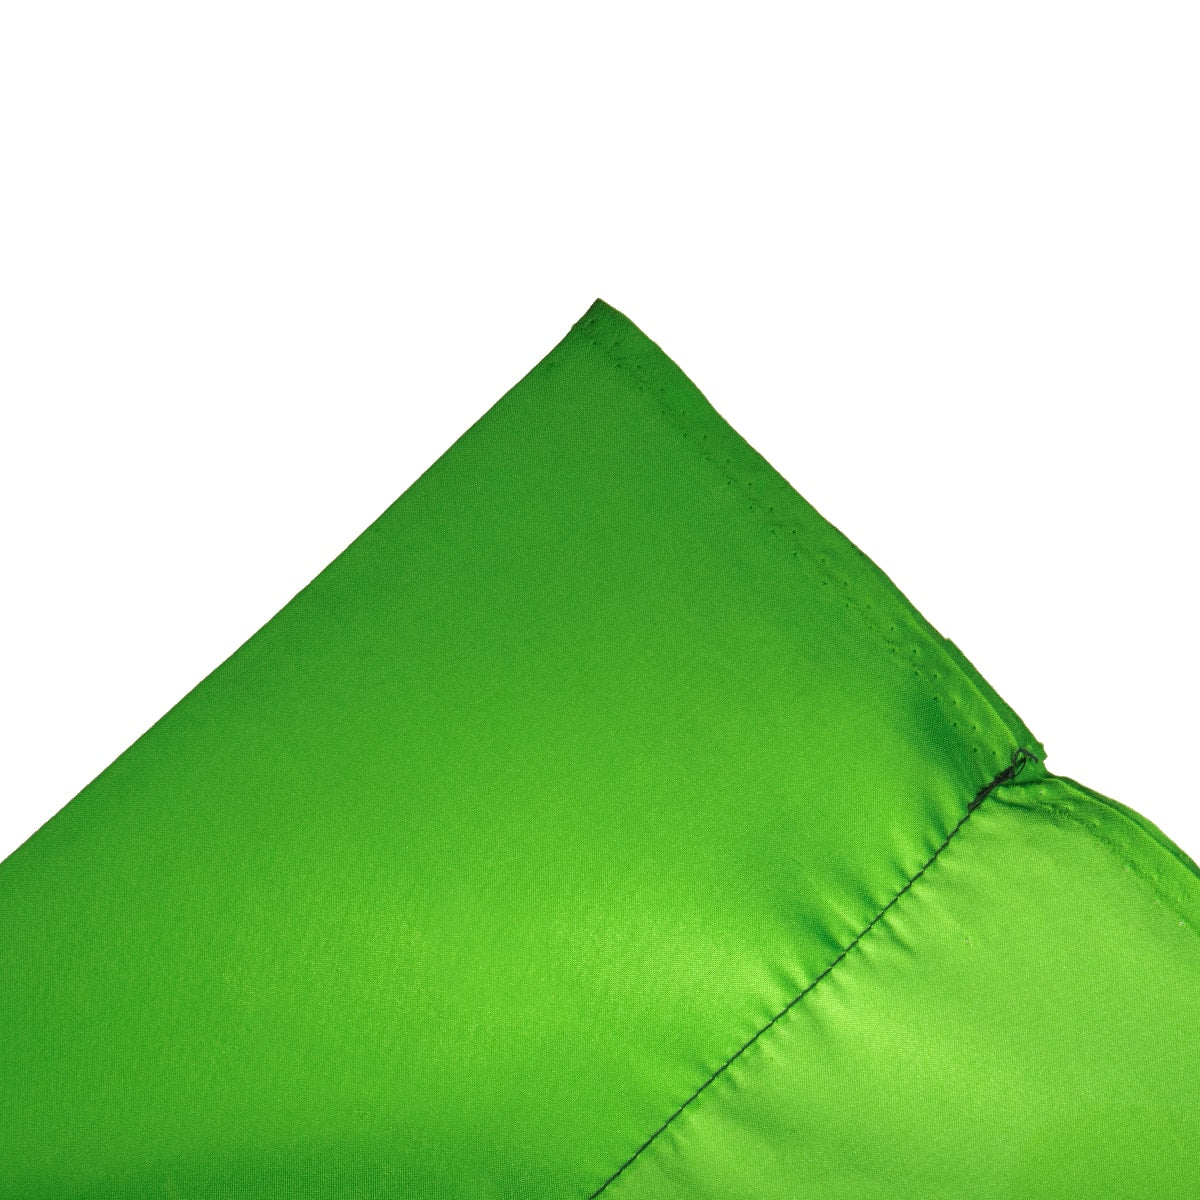  Chroma Green Material/Cotton 300 x 700 cm / 10 x 24'